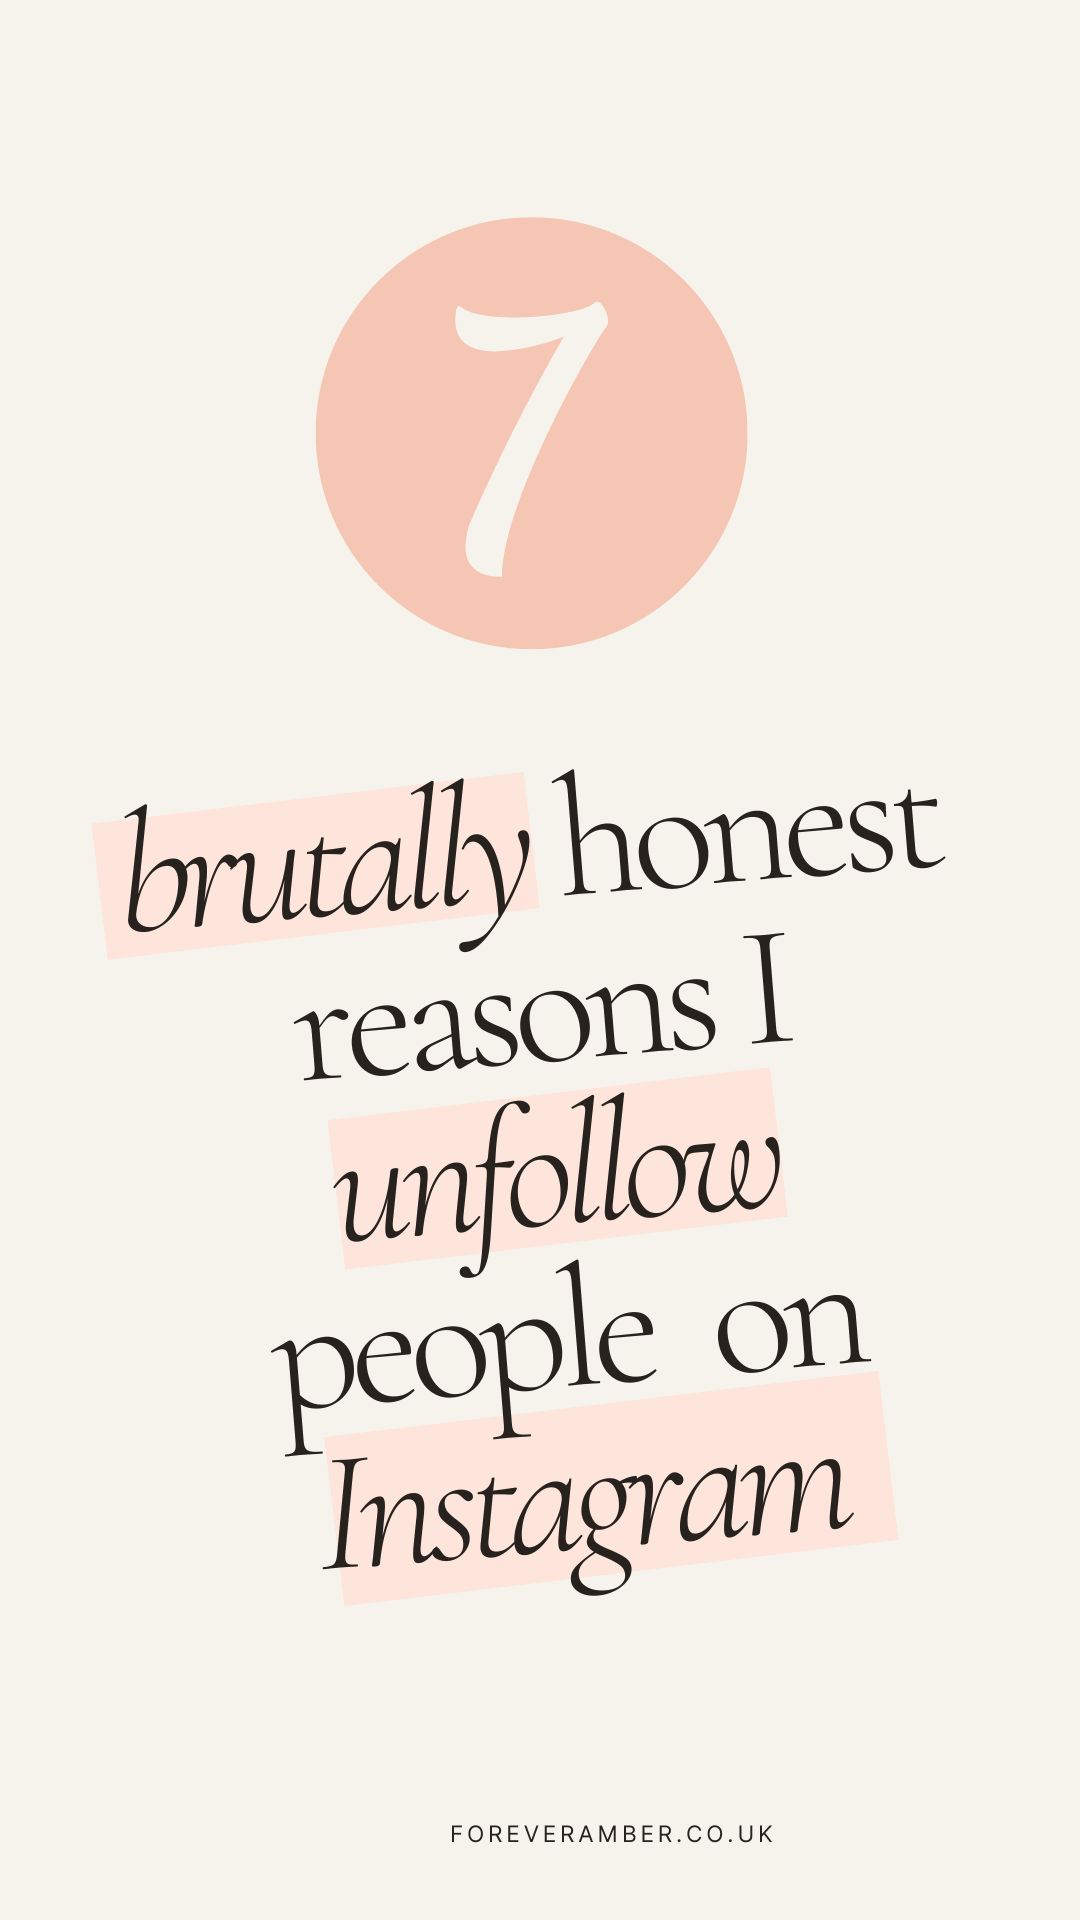 7 brutally honest reasons I unfollowed you on Instagram